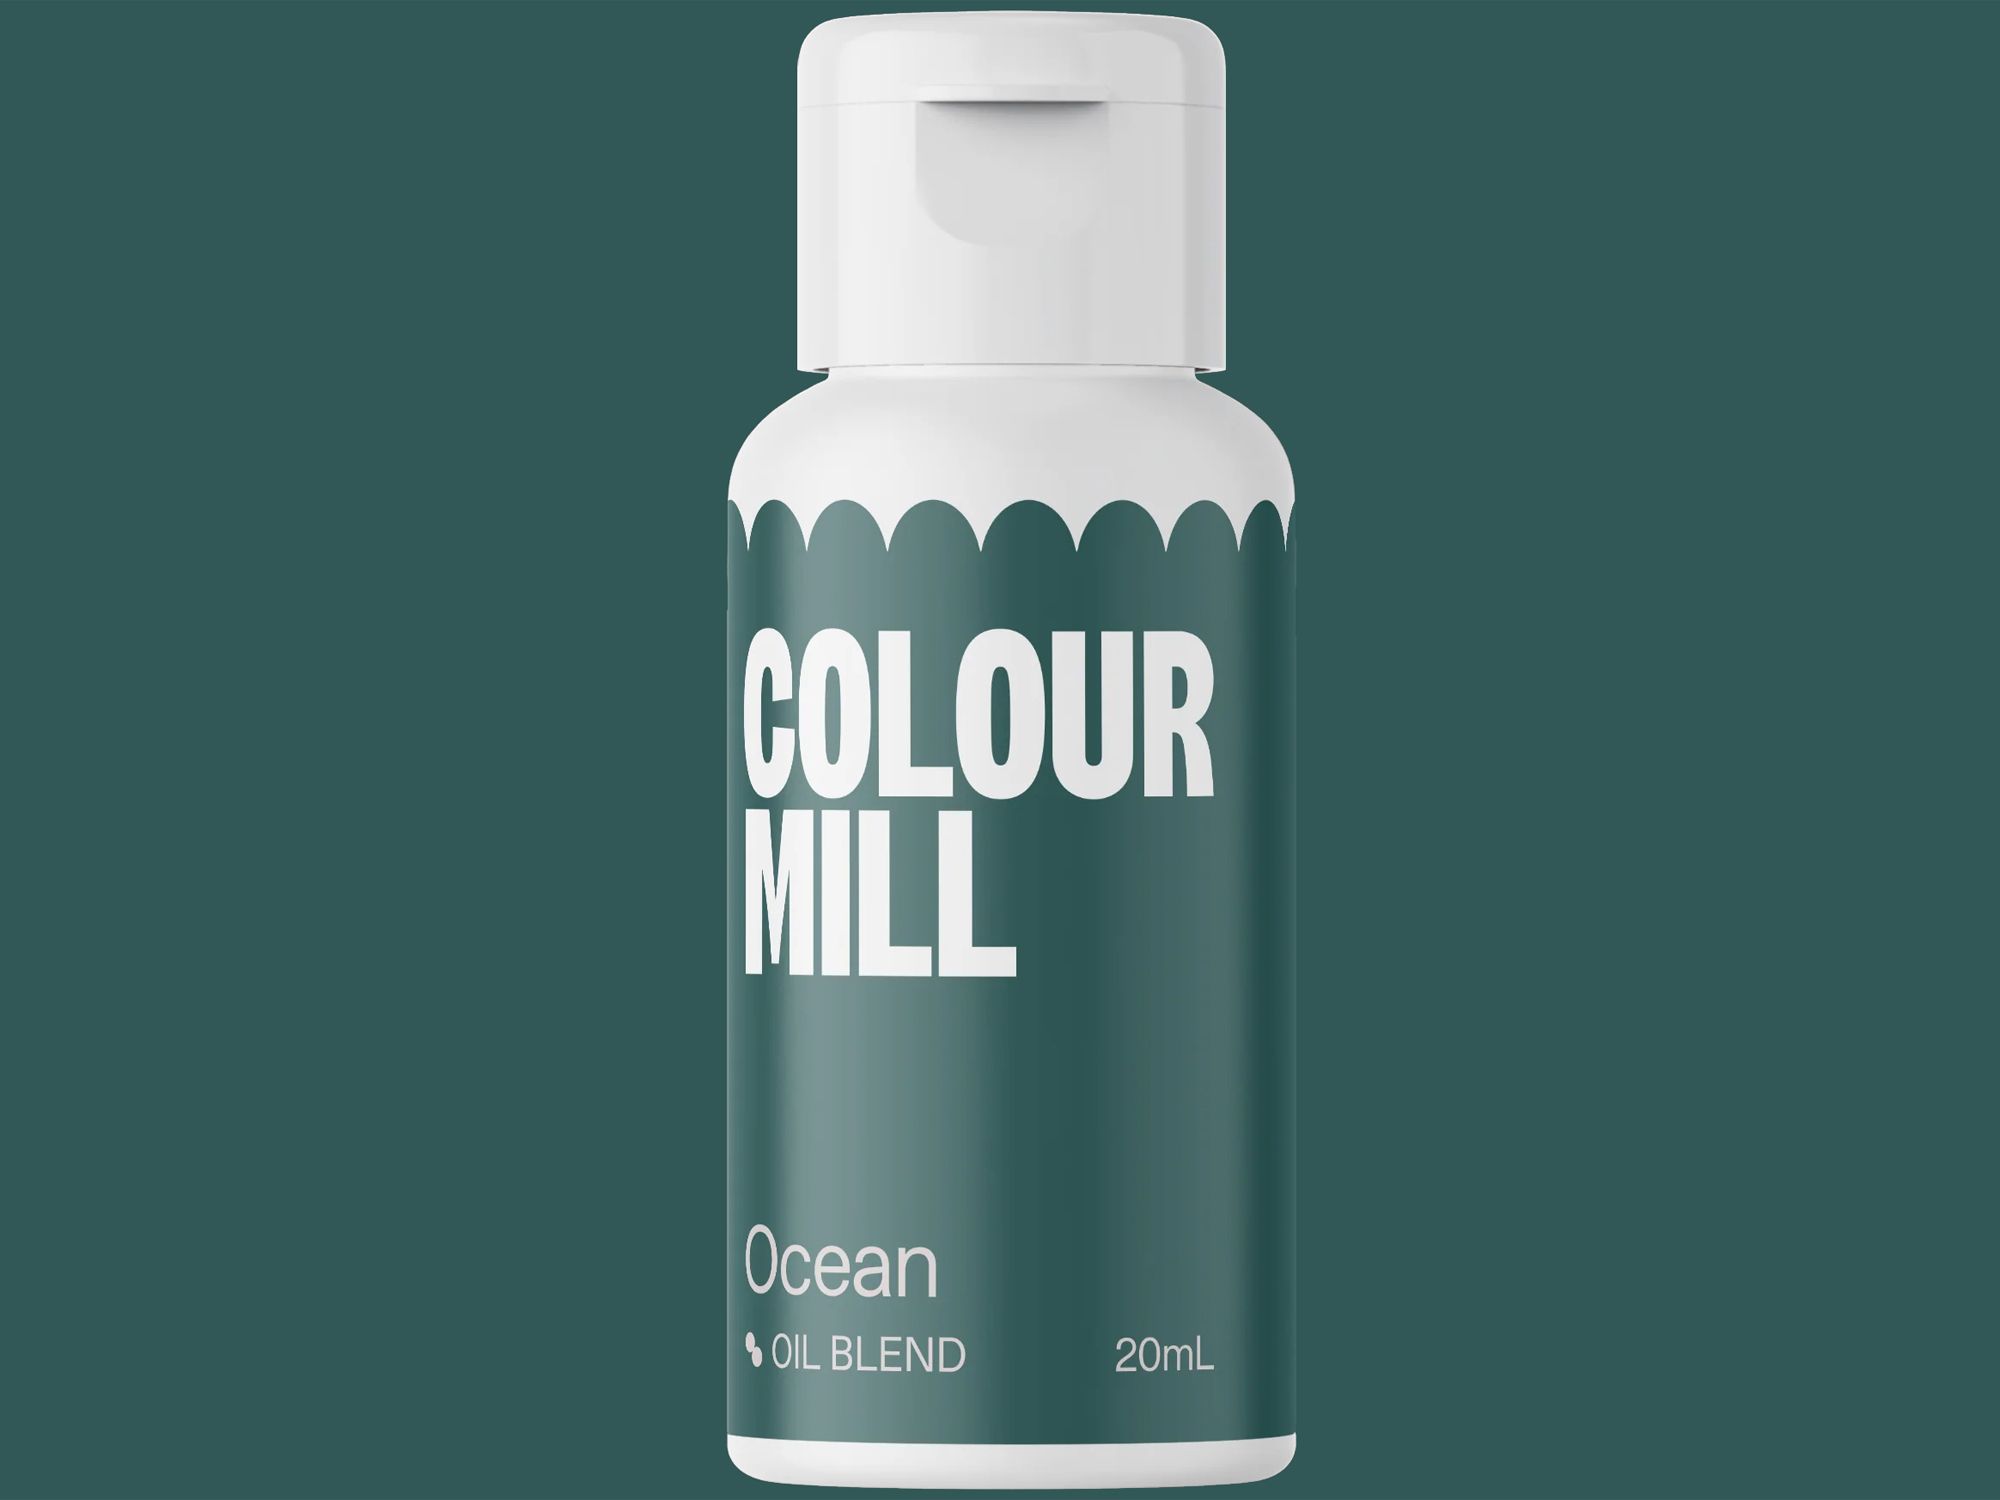 Colour Mill Ocean (Oil Blend) 20ml